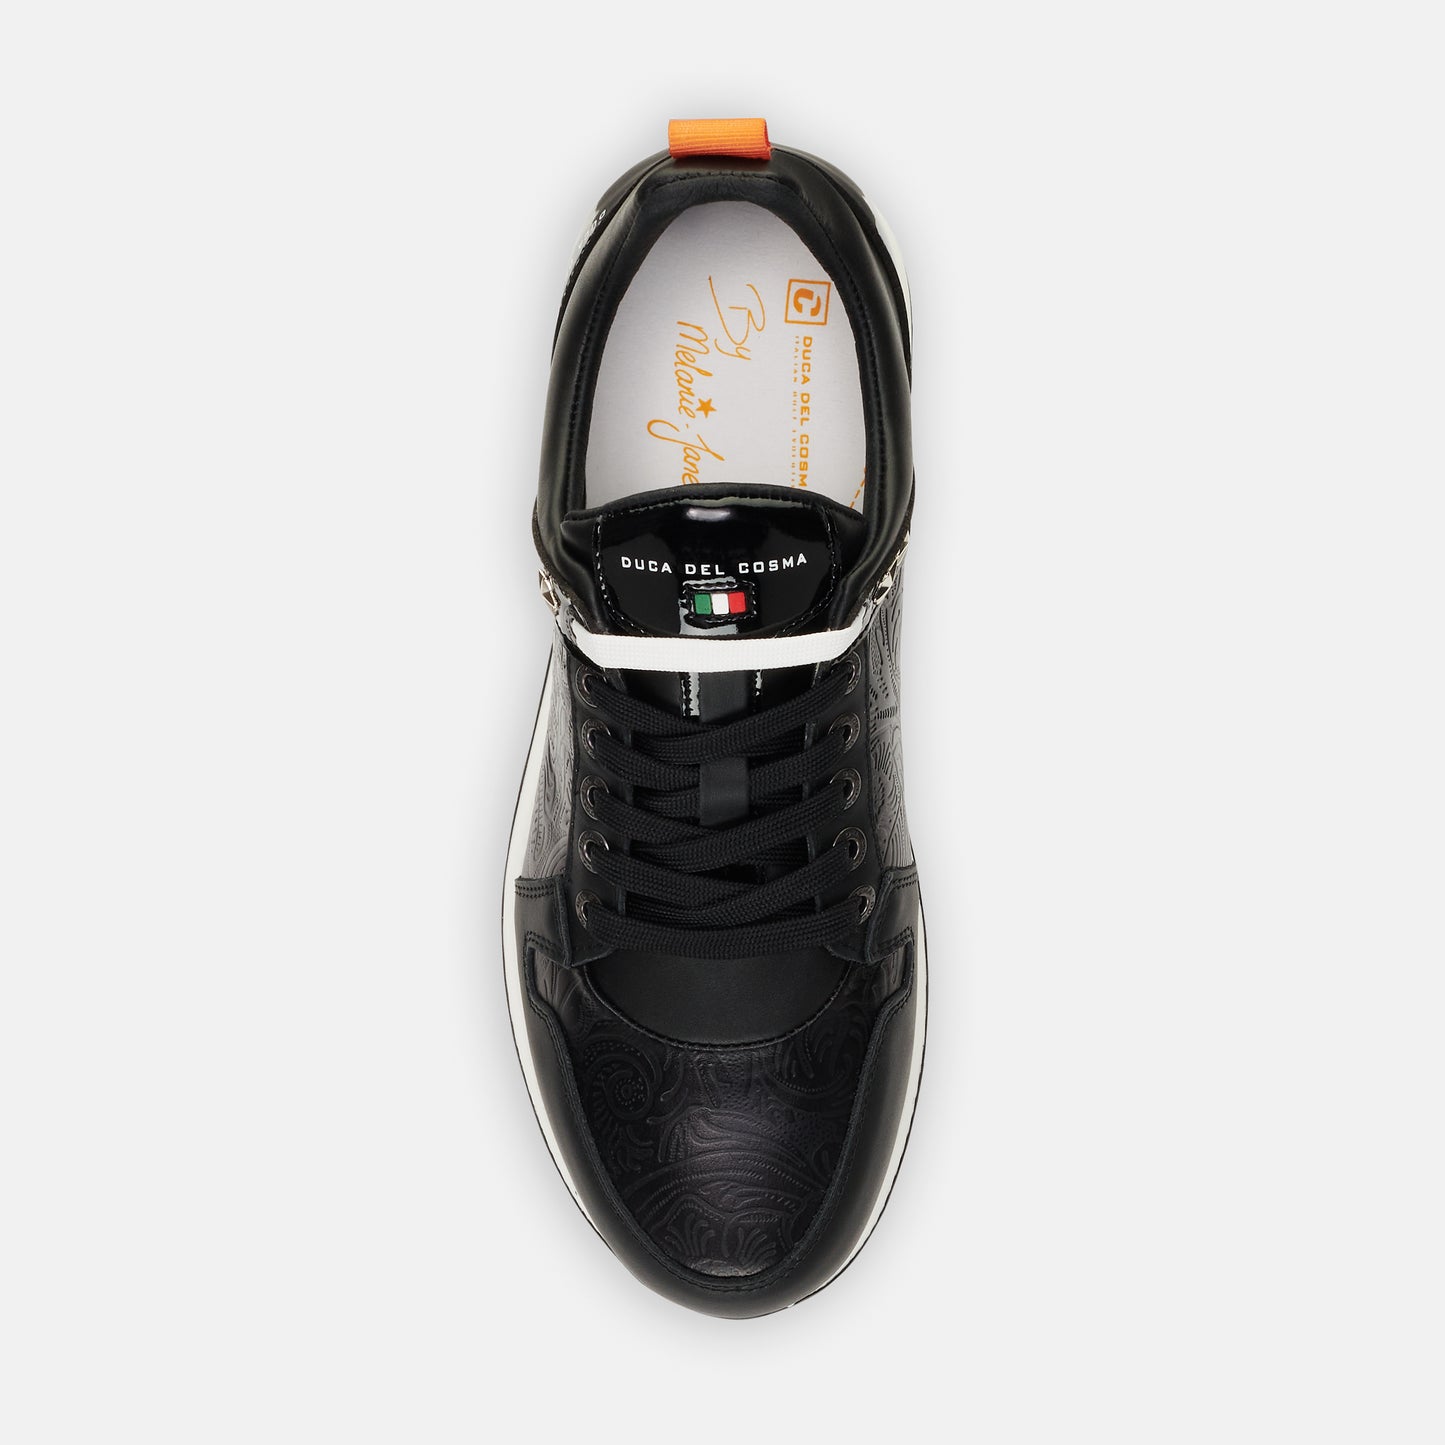 MJ Black - Womens golf shoes